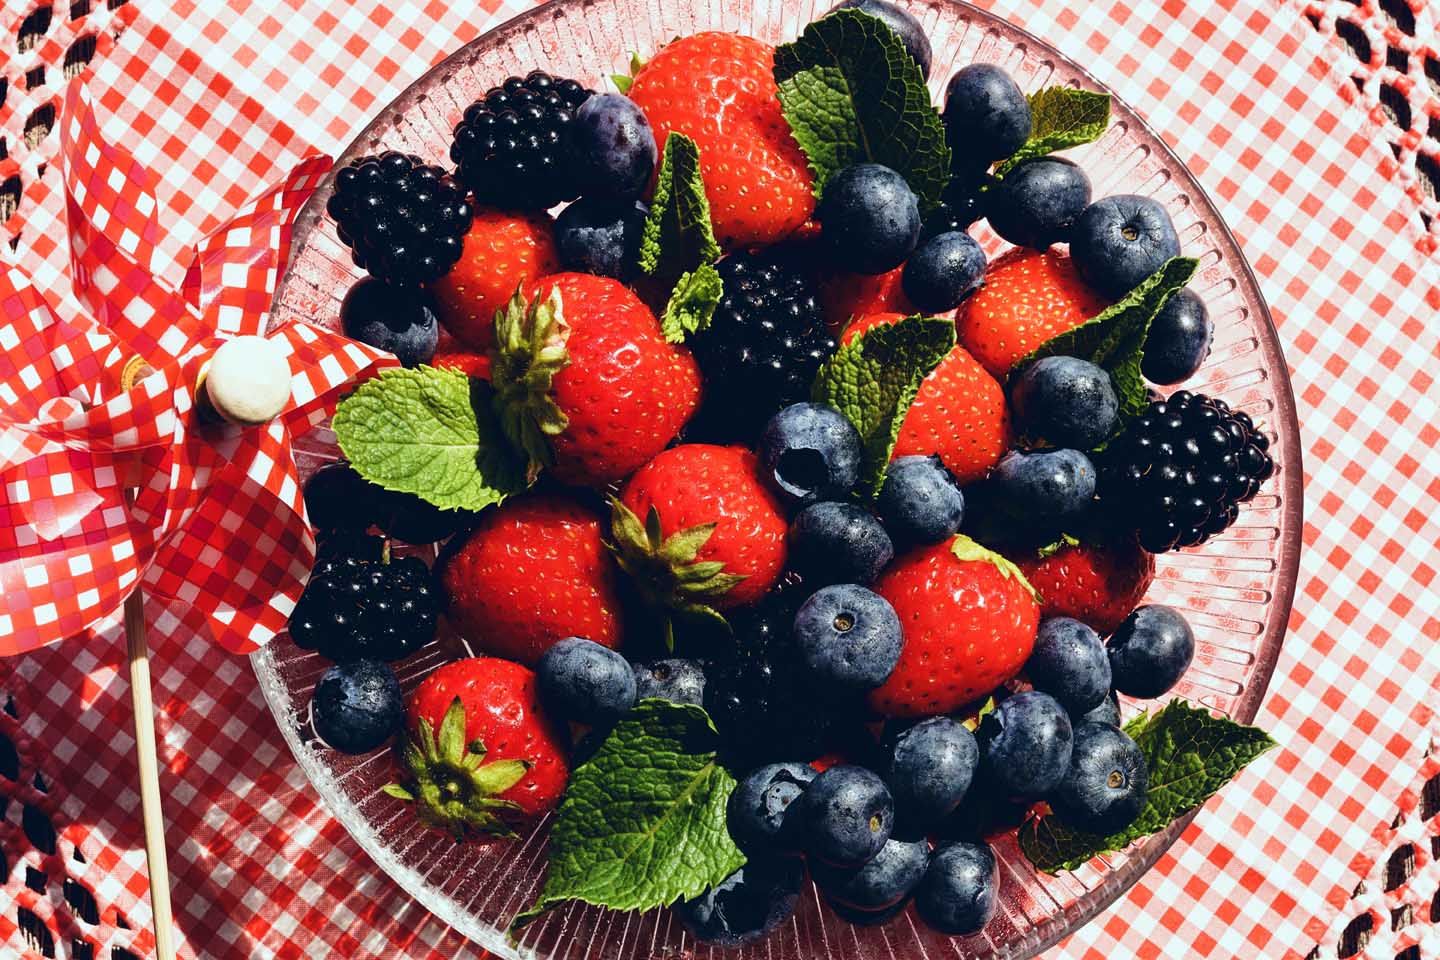 Local berries - Photo by Susanne Jutzeler from Pexels